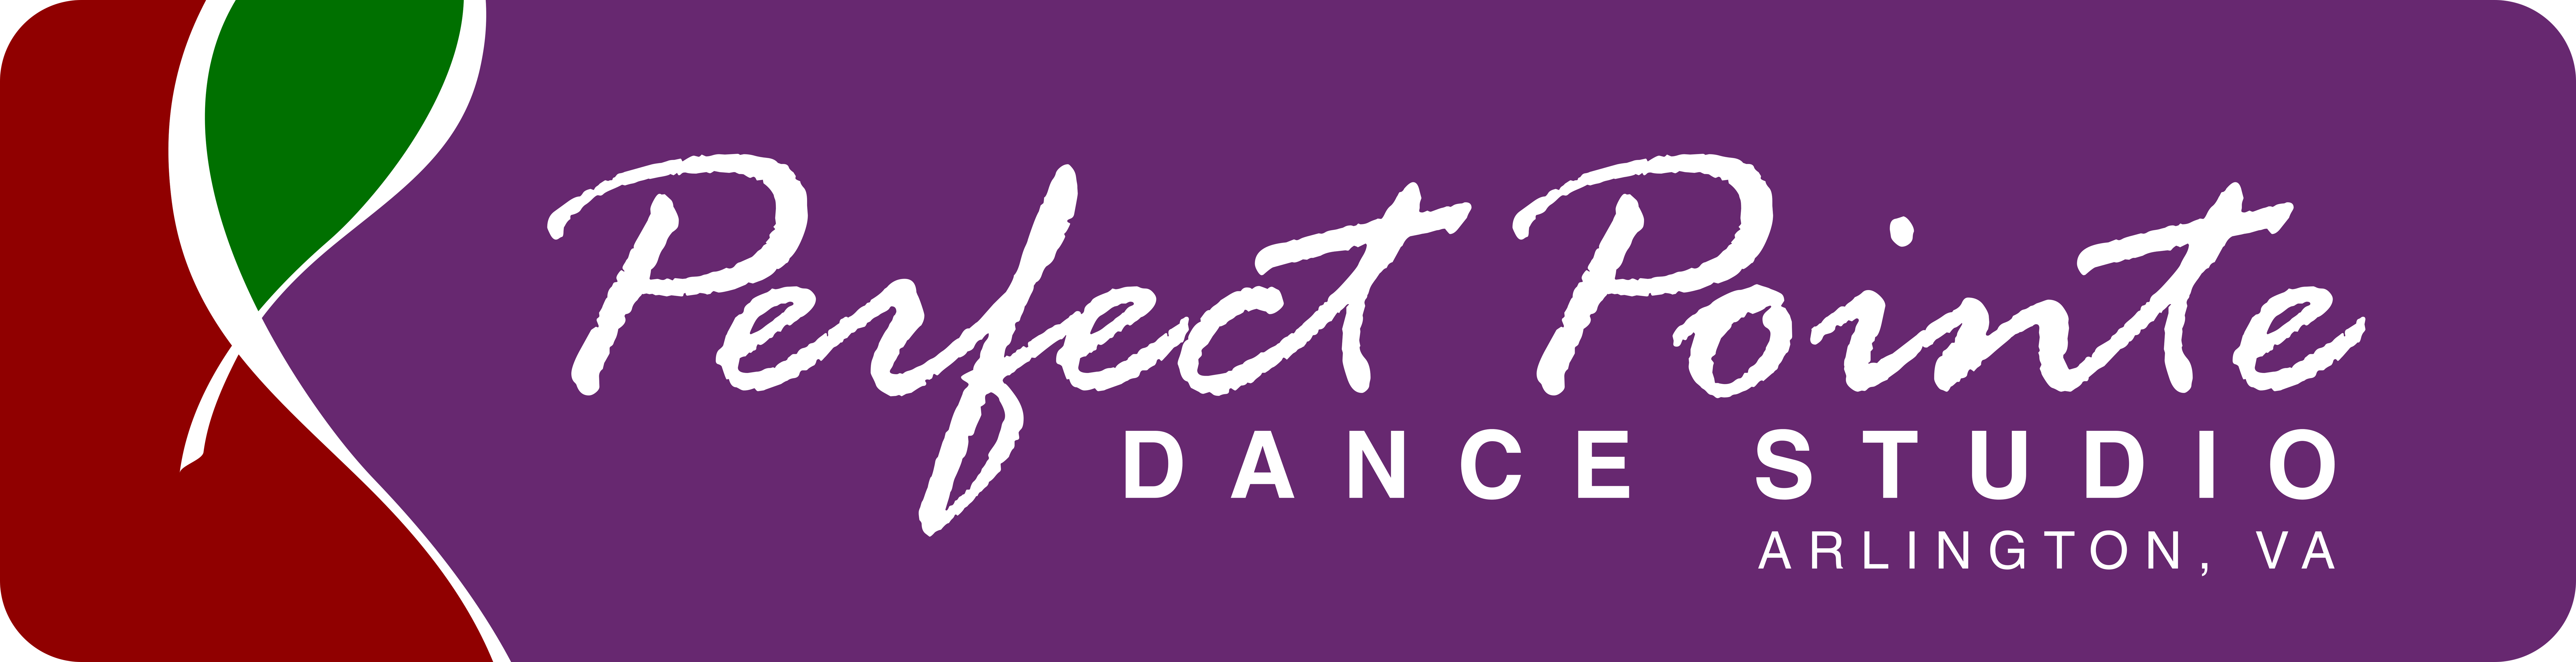 perfect pointe dance boutique